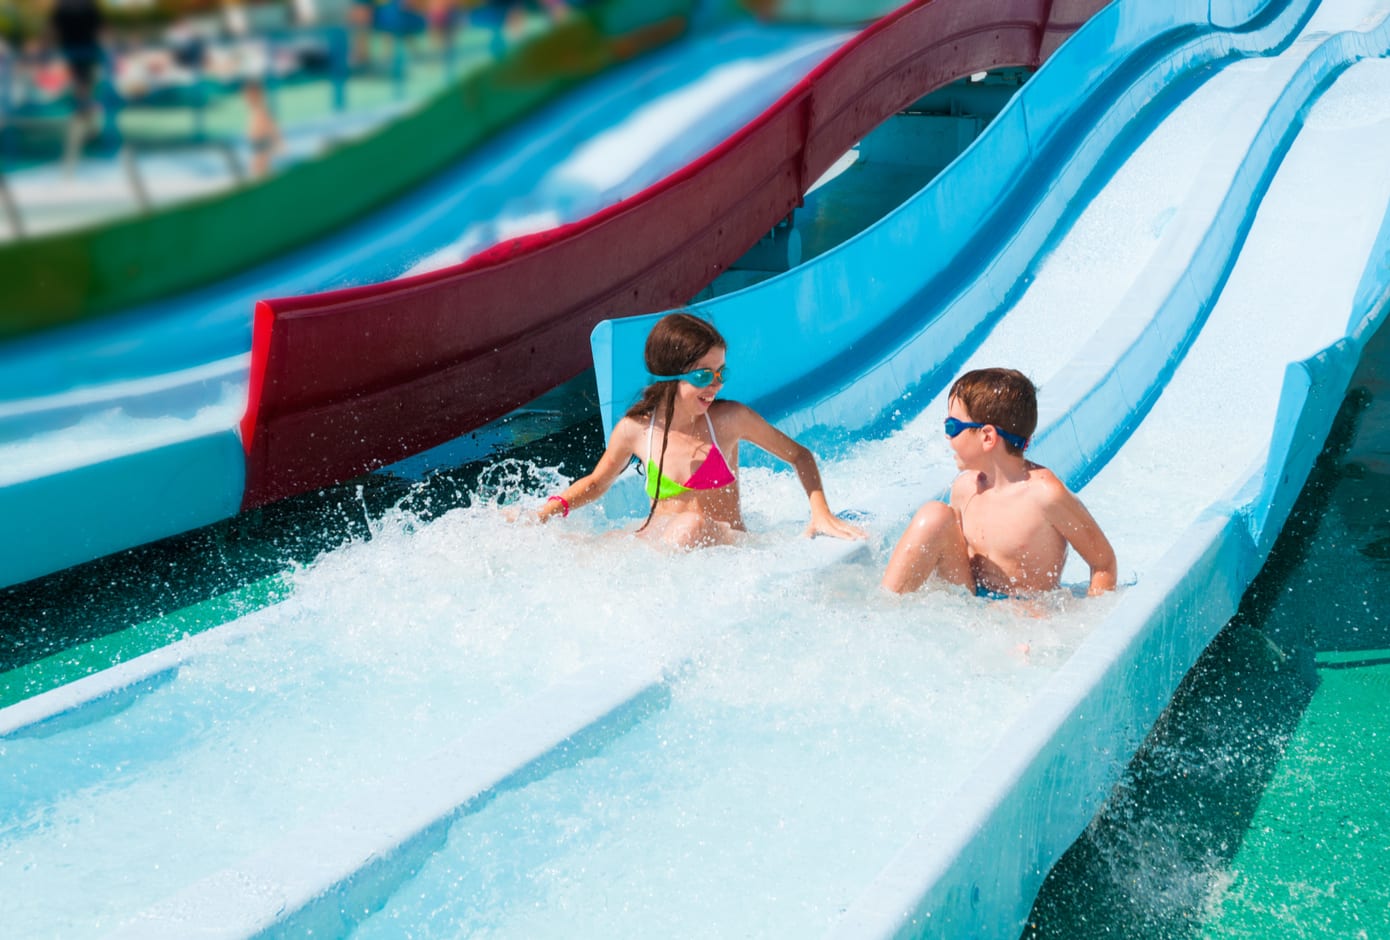 Two kids having fun at a water slide.